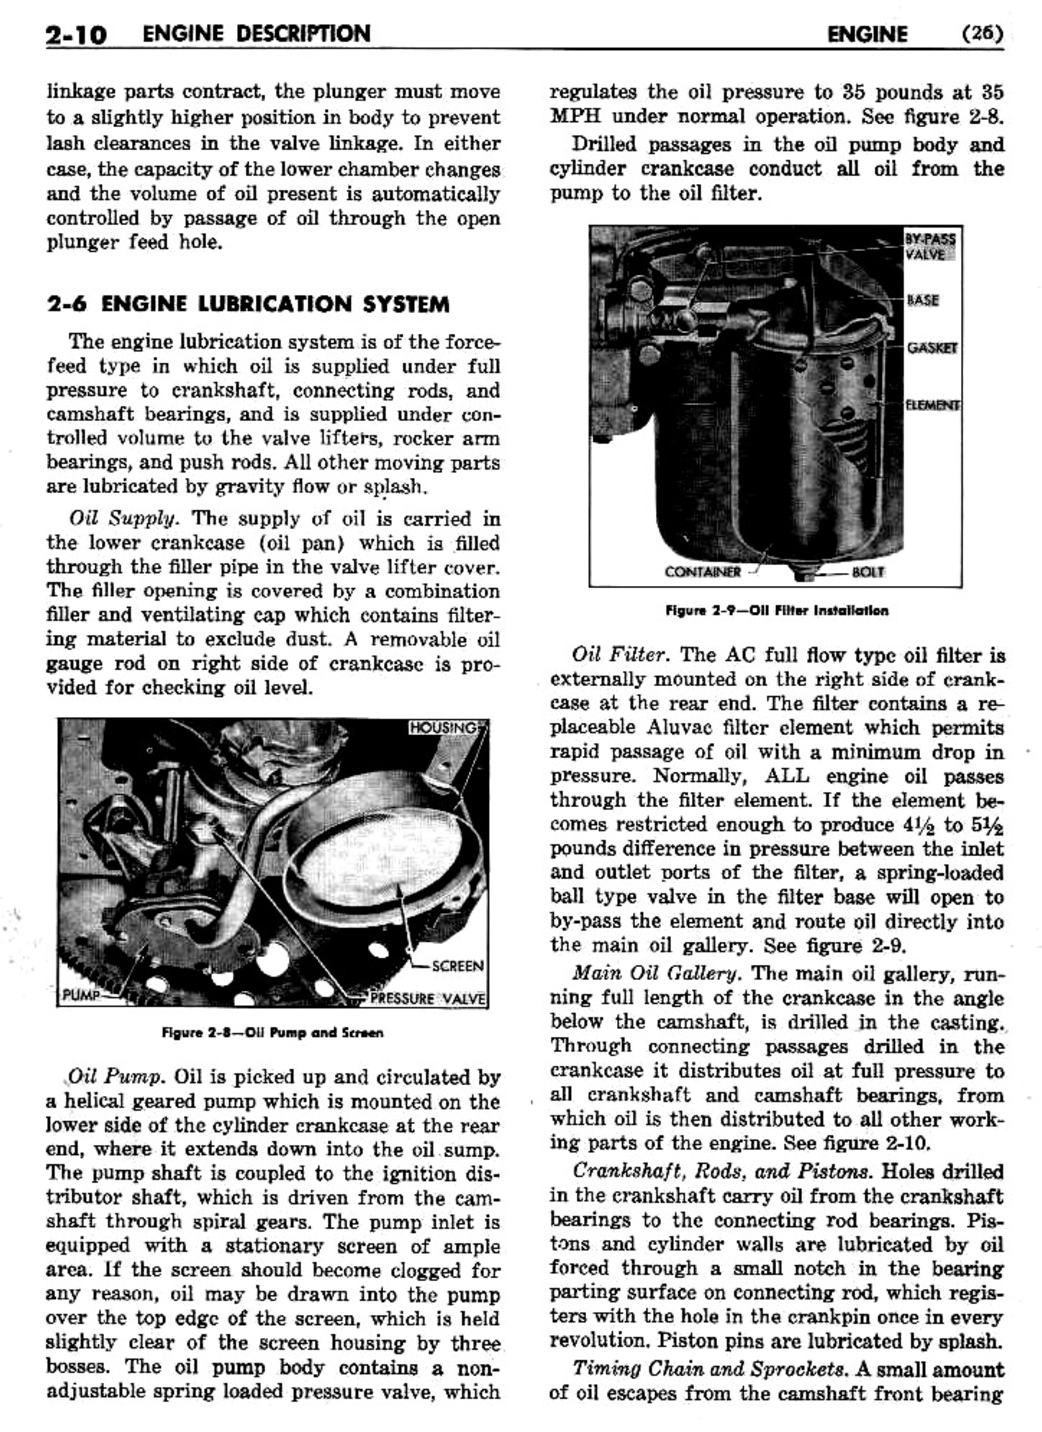 n_03 1955 Buick Shop Manual - Engine-010-010.jpg